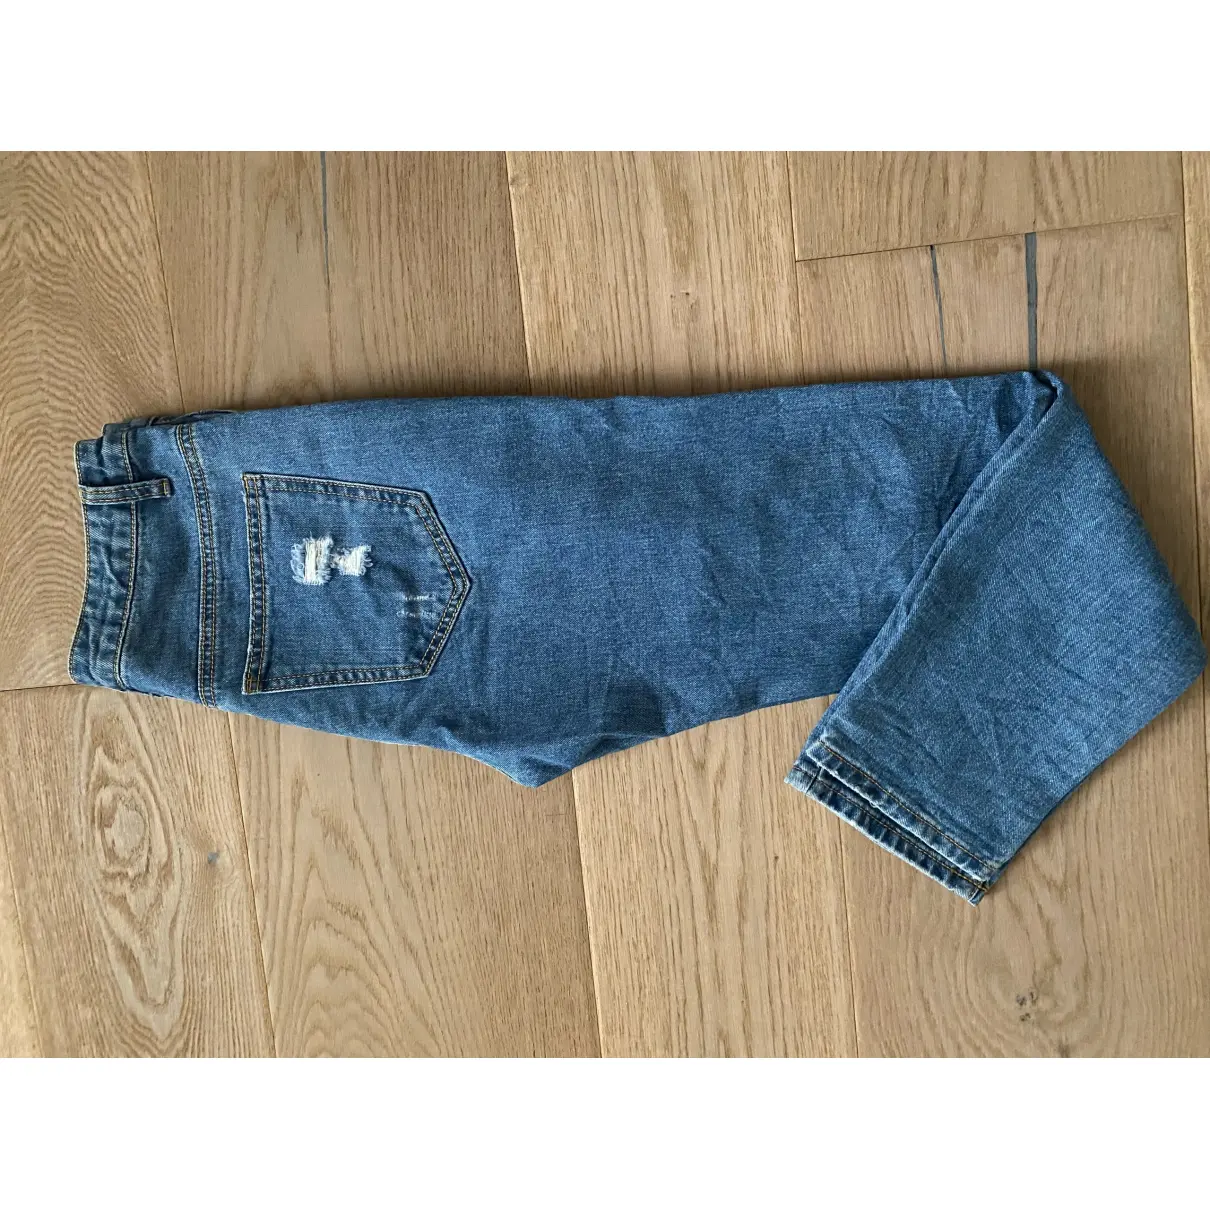 Buy Gil Santucci Boyfriend jeans online